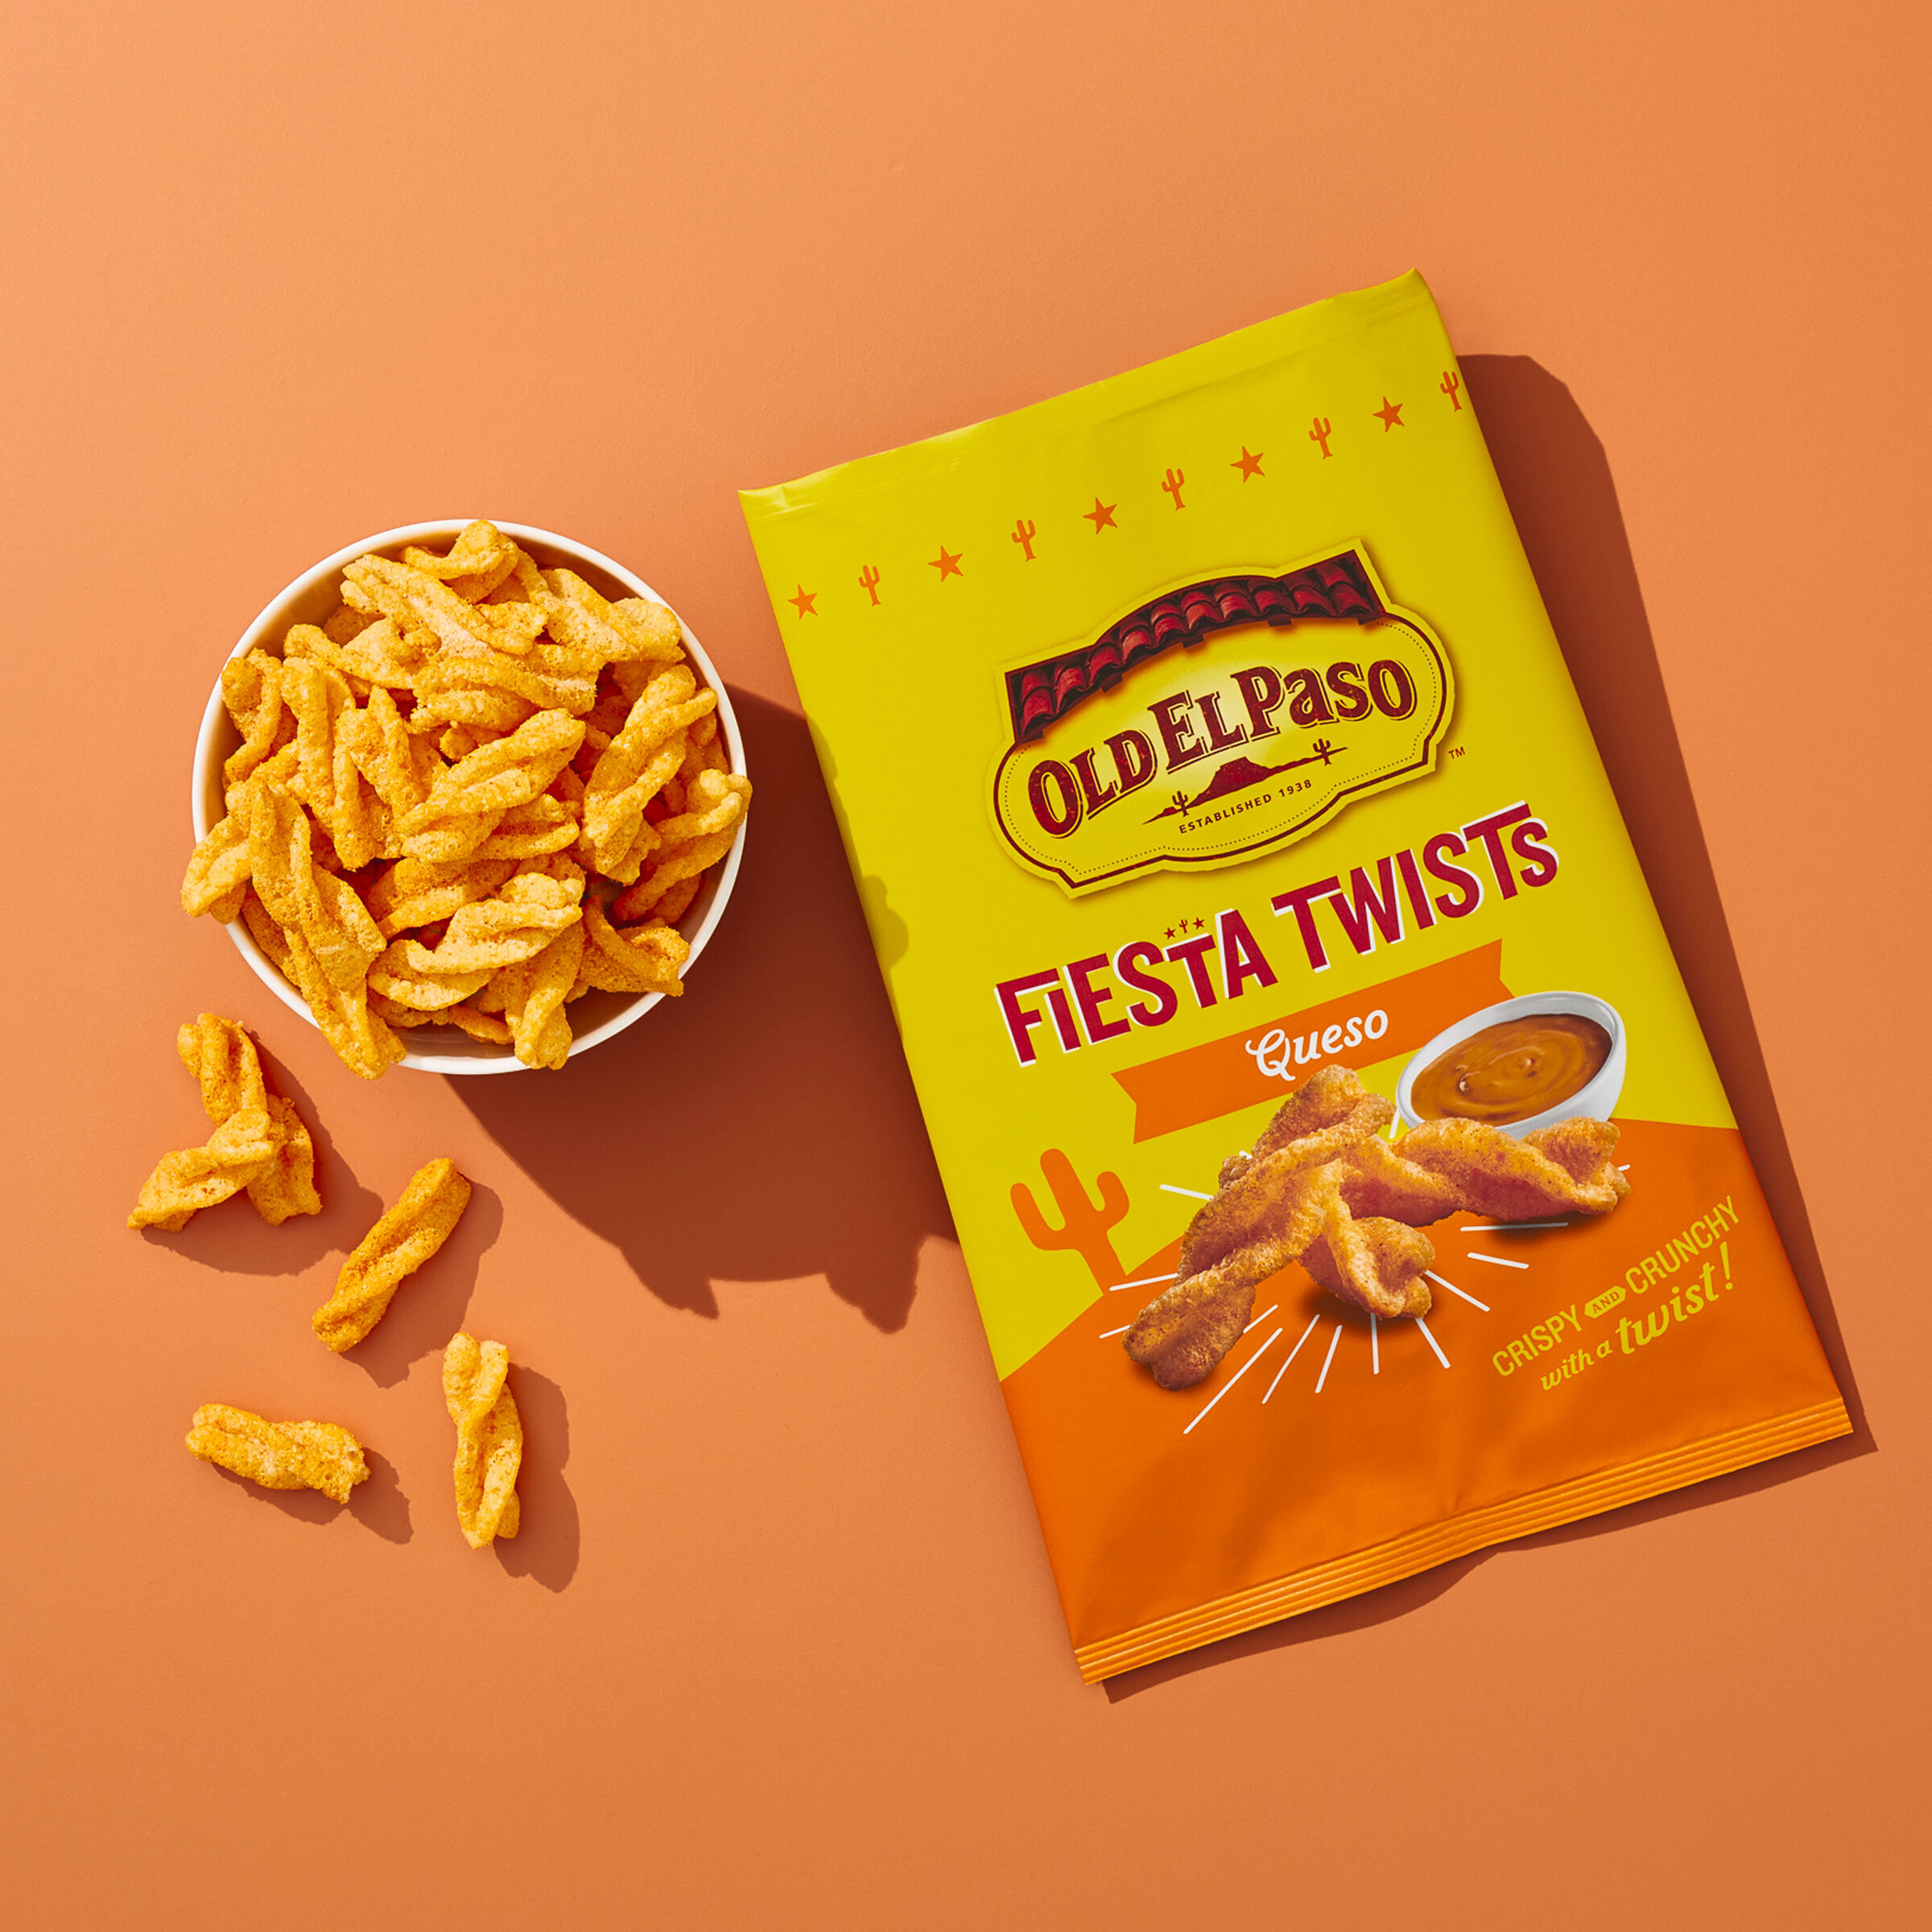 Old El Paso Fiesta Twists, Queso Cheese, Crispy Corn Snacks, 5.5 oz - image 4 of 10